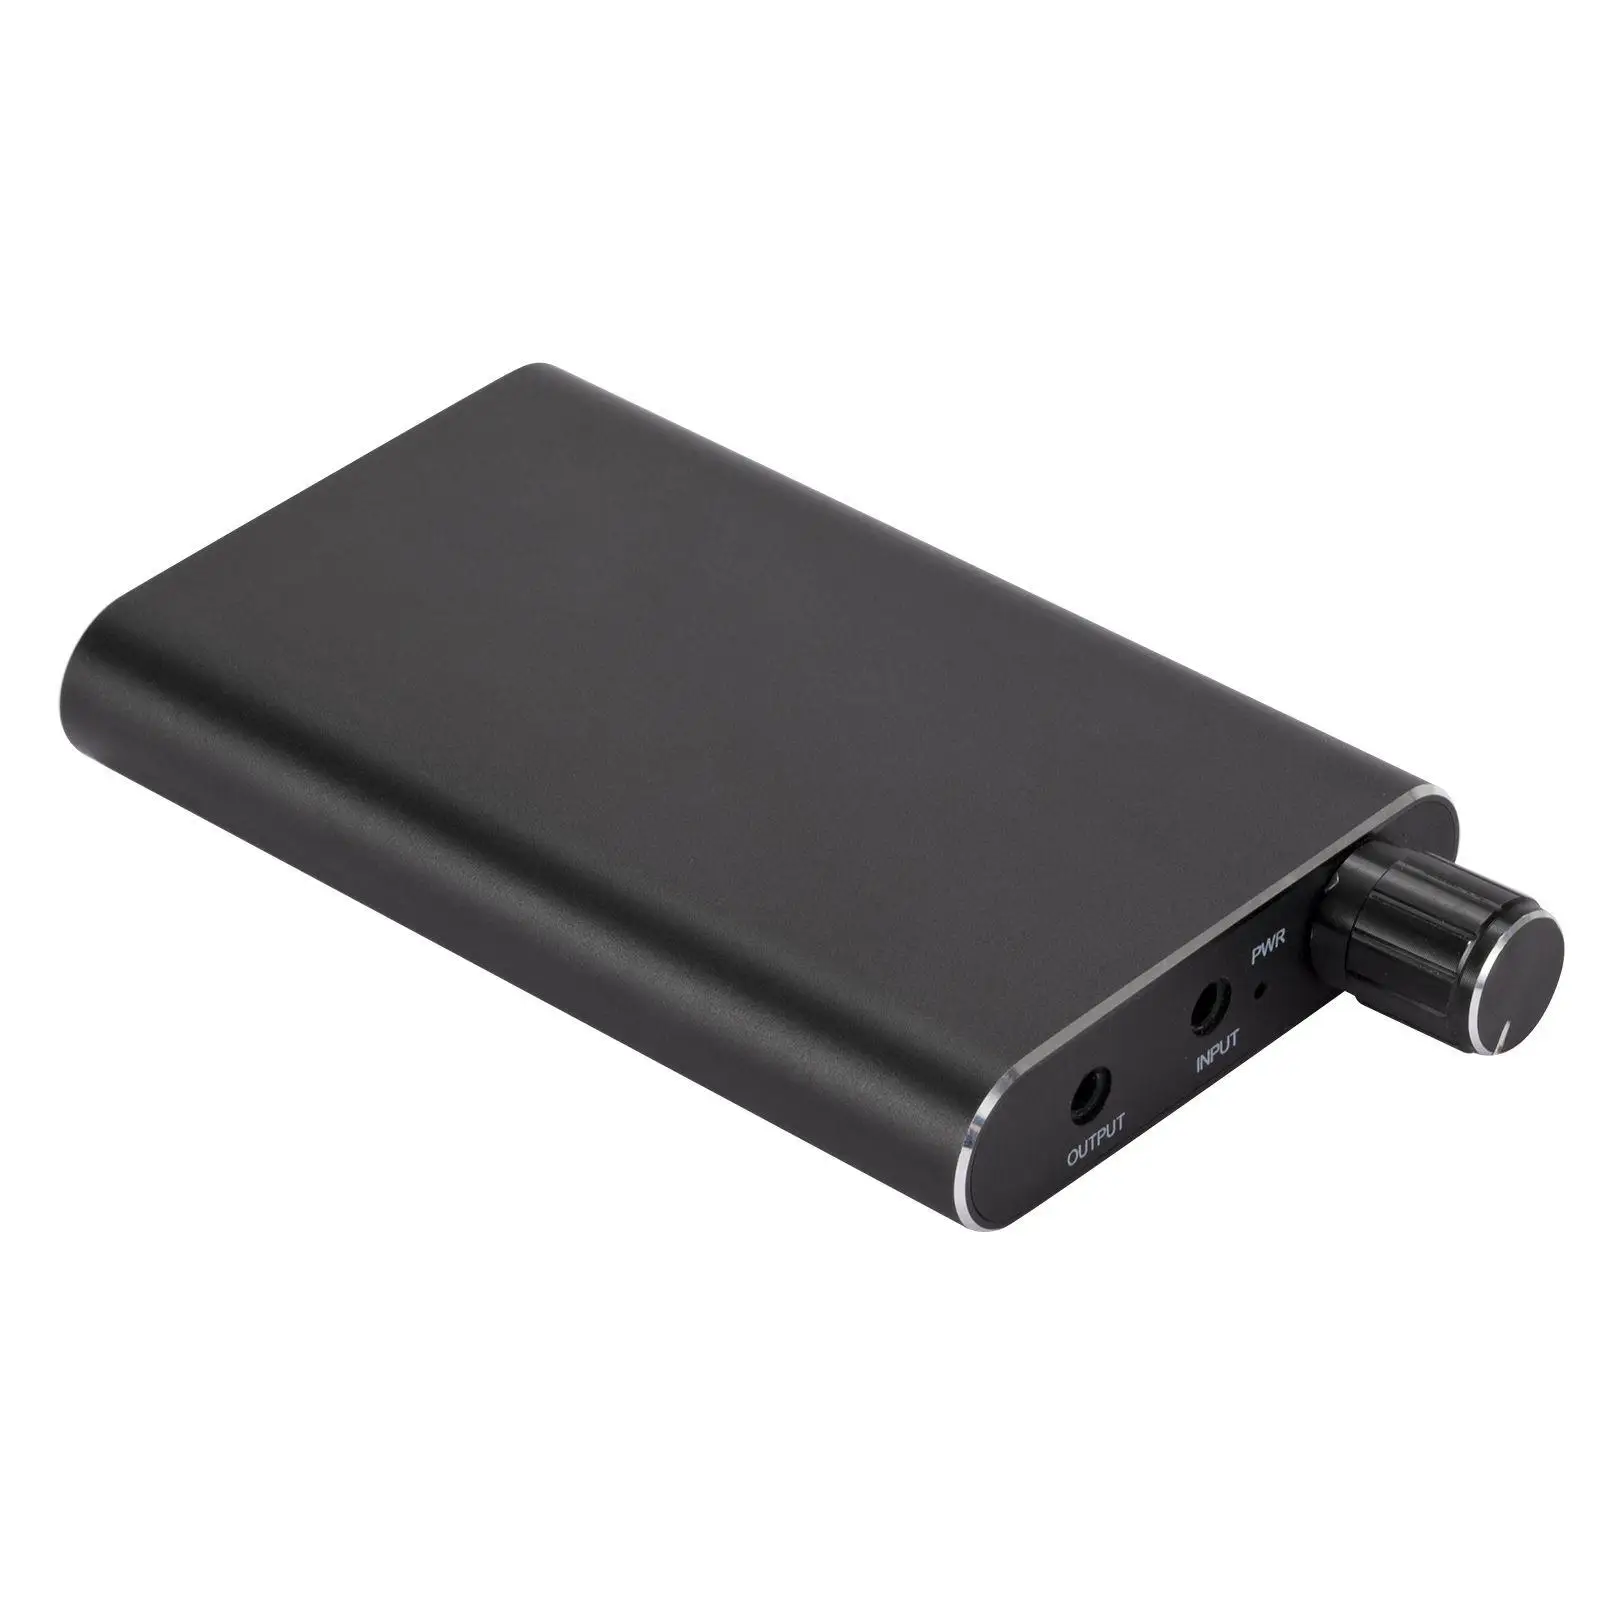  Headset Amplifier Portable Headphone Amplifier 3.5mm for MP3 MP4, Black